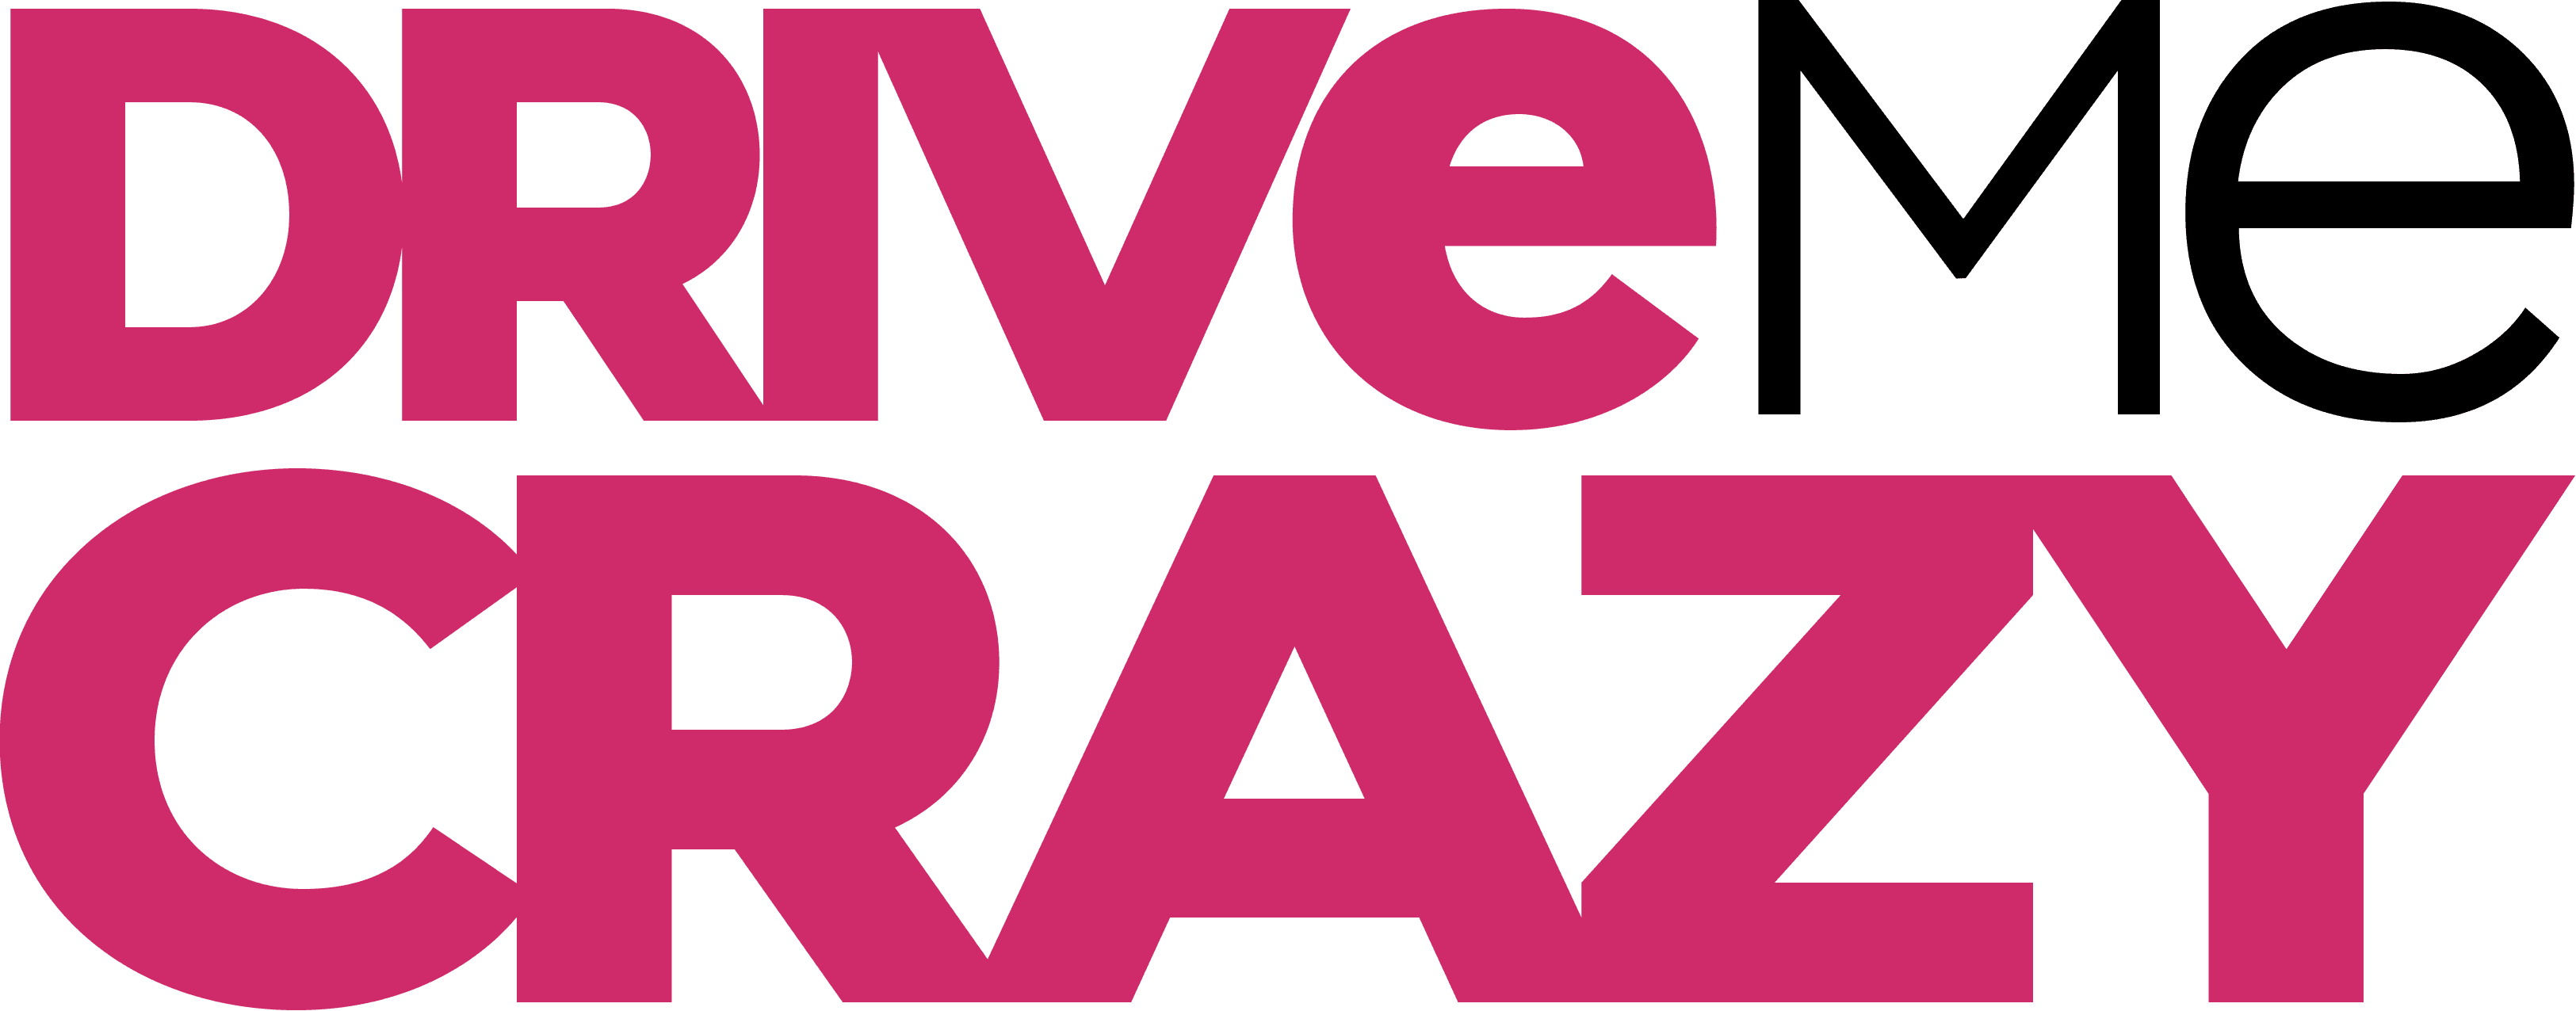 Drive Me Crazy logo